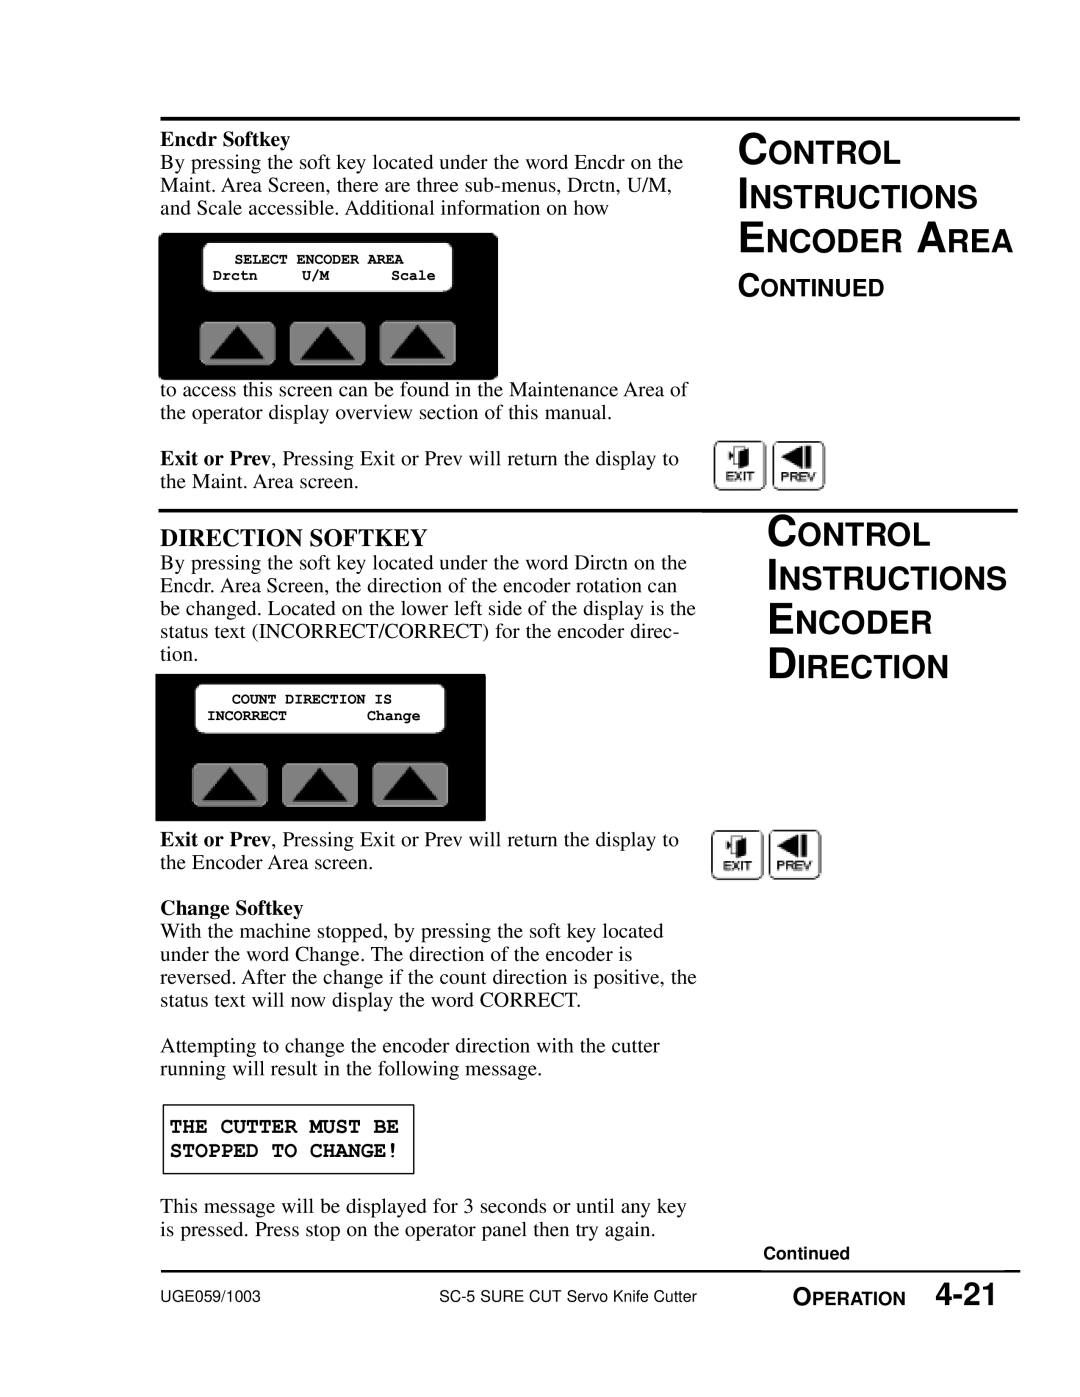 Conair SC-5 tion. INCORRECTCOUNTDIRECTIONIS, Control Instructions Encoder Direction, Direction Softkey, Change Softkey 